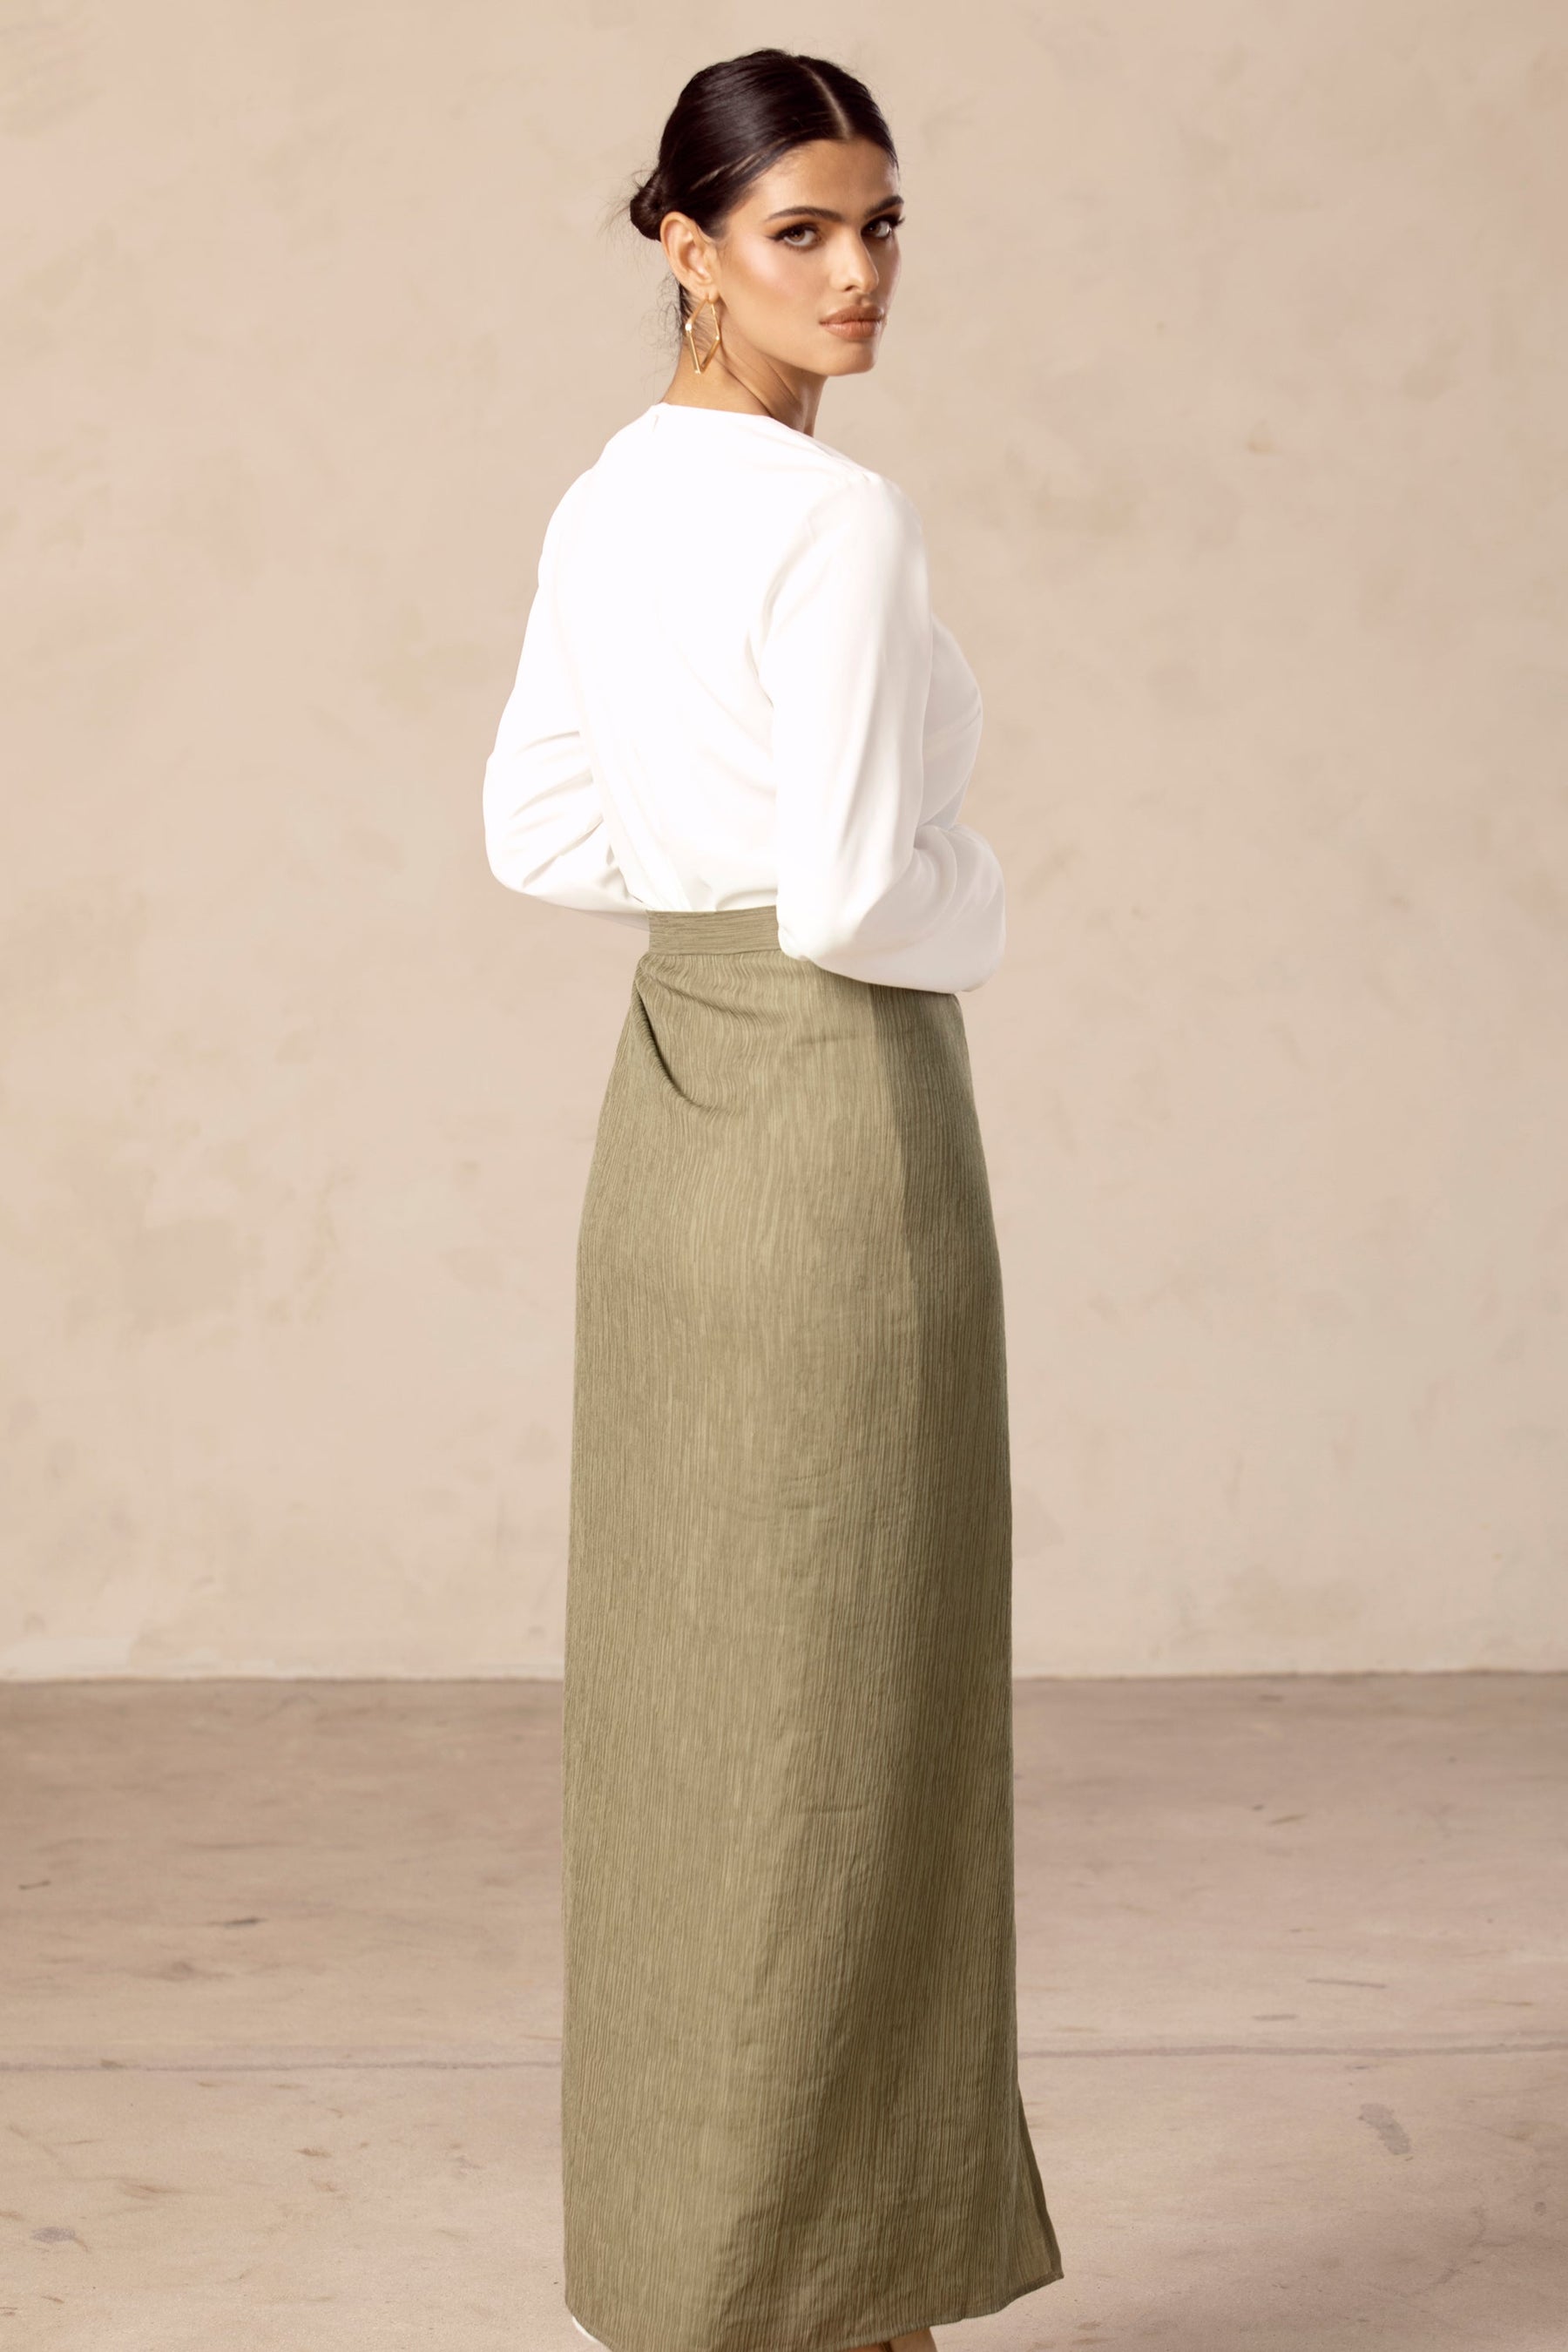 Rana Textured Overlay Tie Skirt - Gardenia Green epschoolboard 